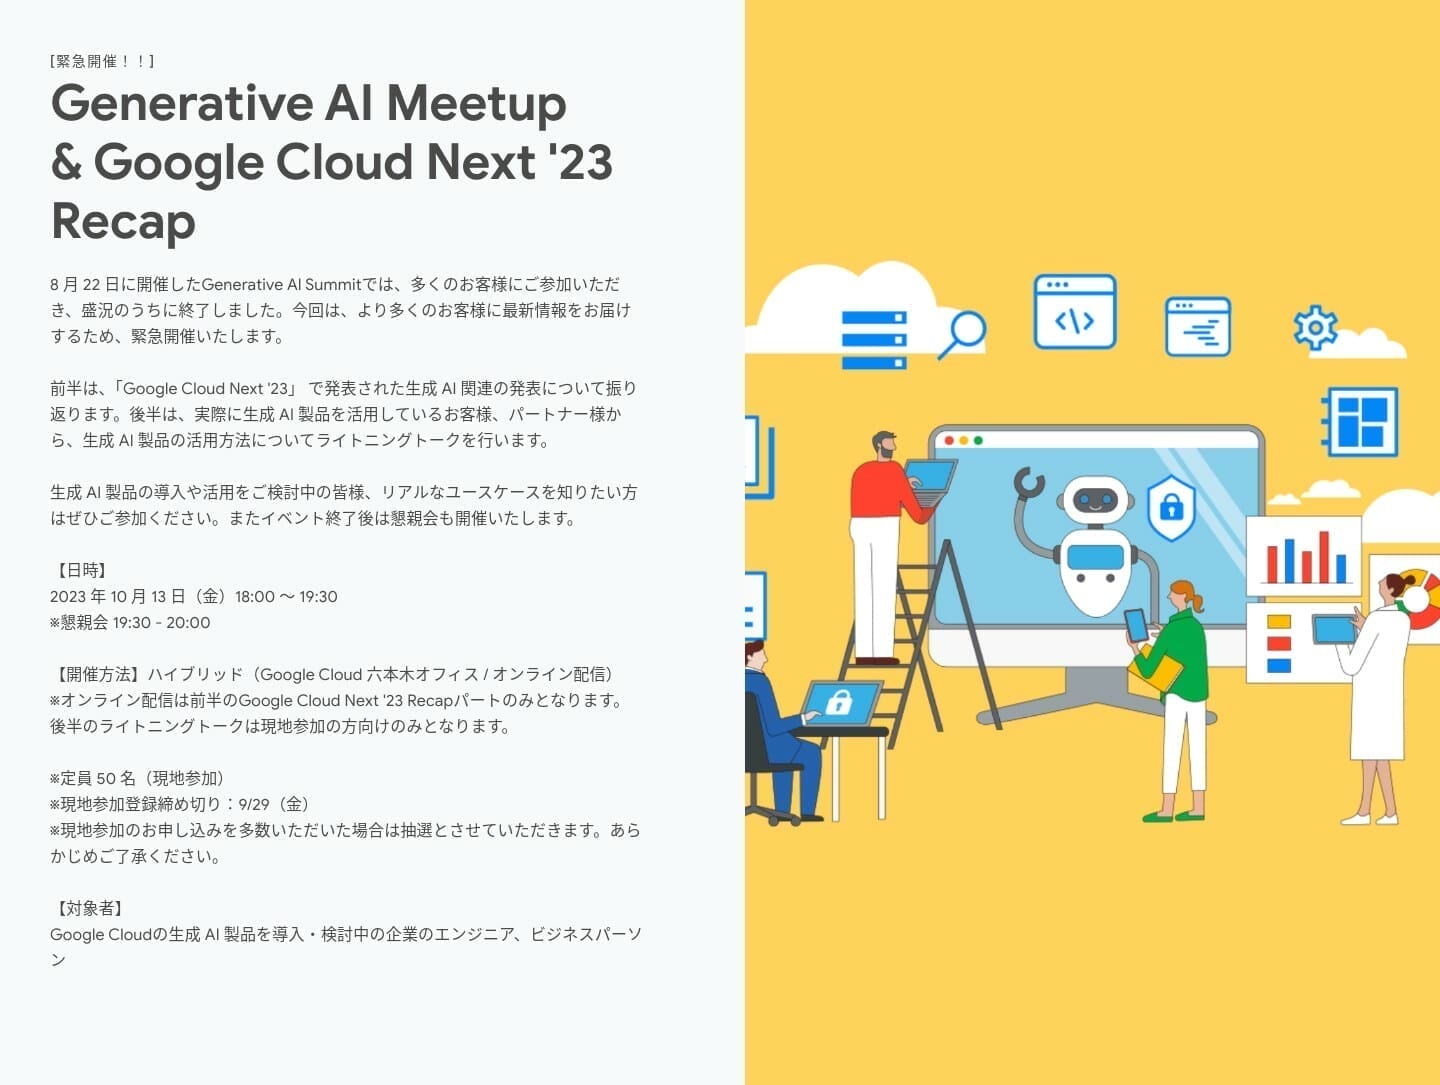 [Google Cloud] Generative AI Meetup & Google Cloud Next '23 Recap